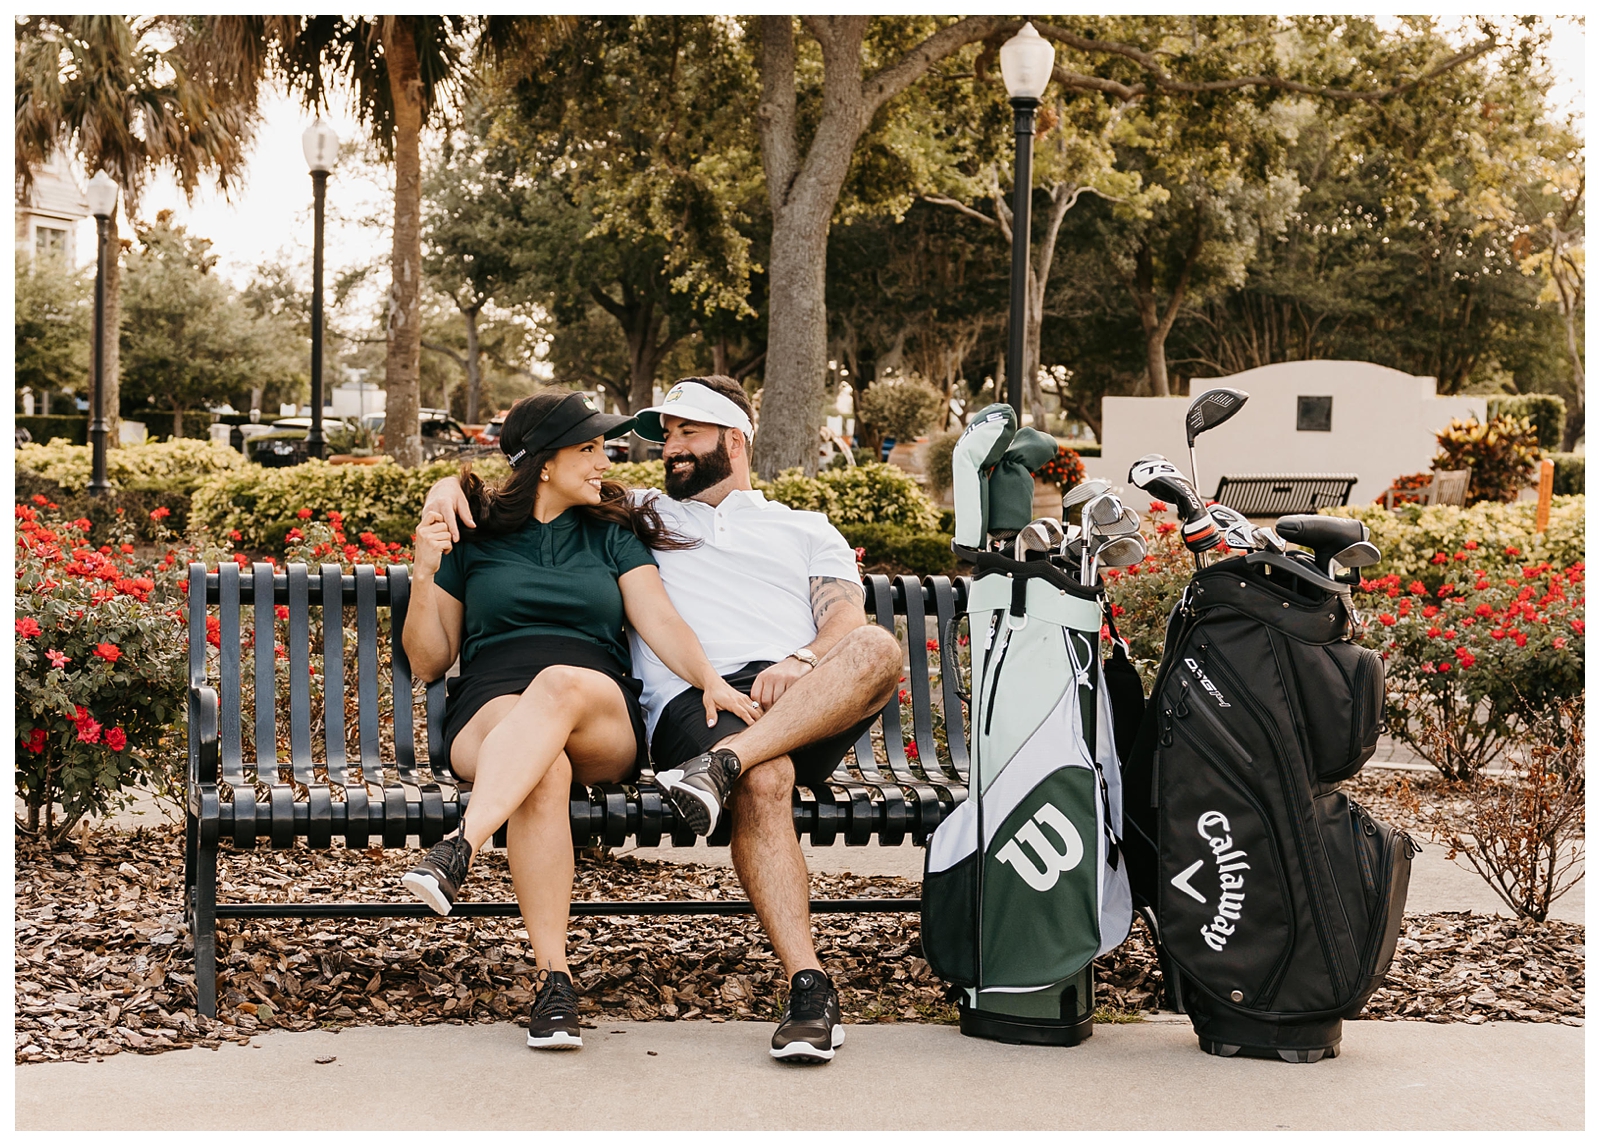 Golf engagement photos